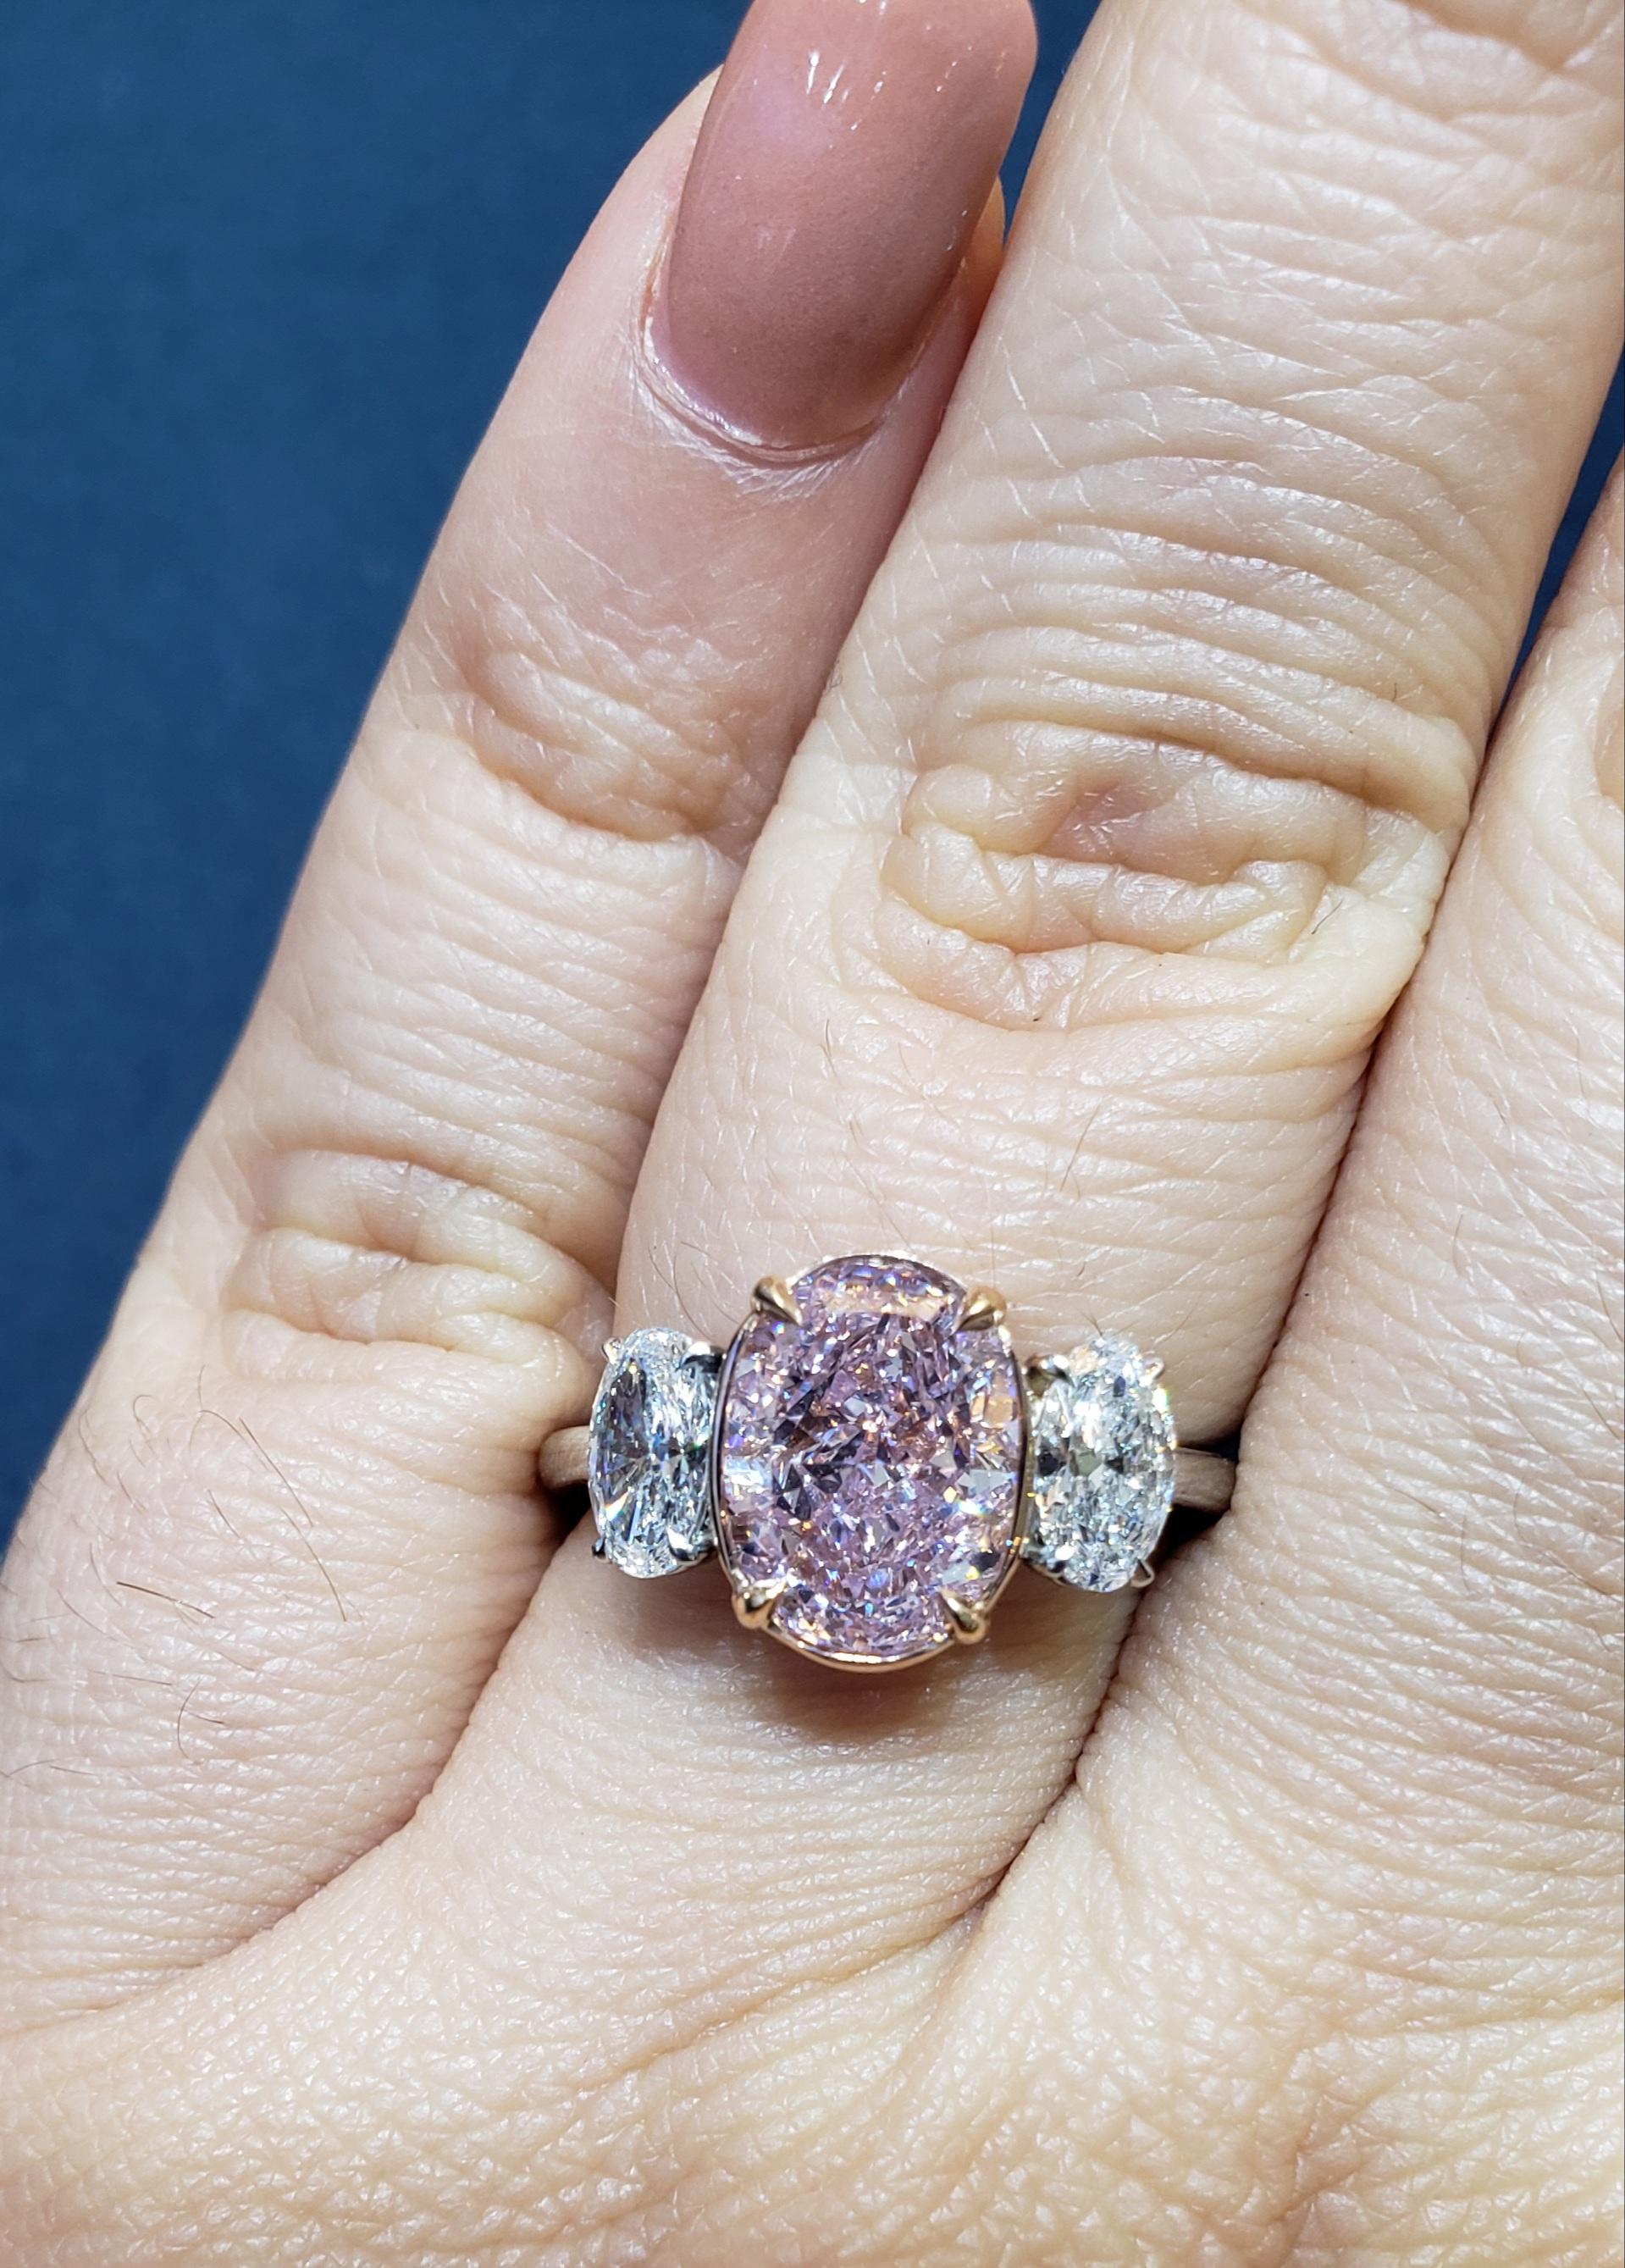 David Rosenberg 2.67 Carat Oval Fancy Pink Purple GIA Diamond Engagement Ring For Sale 4